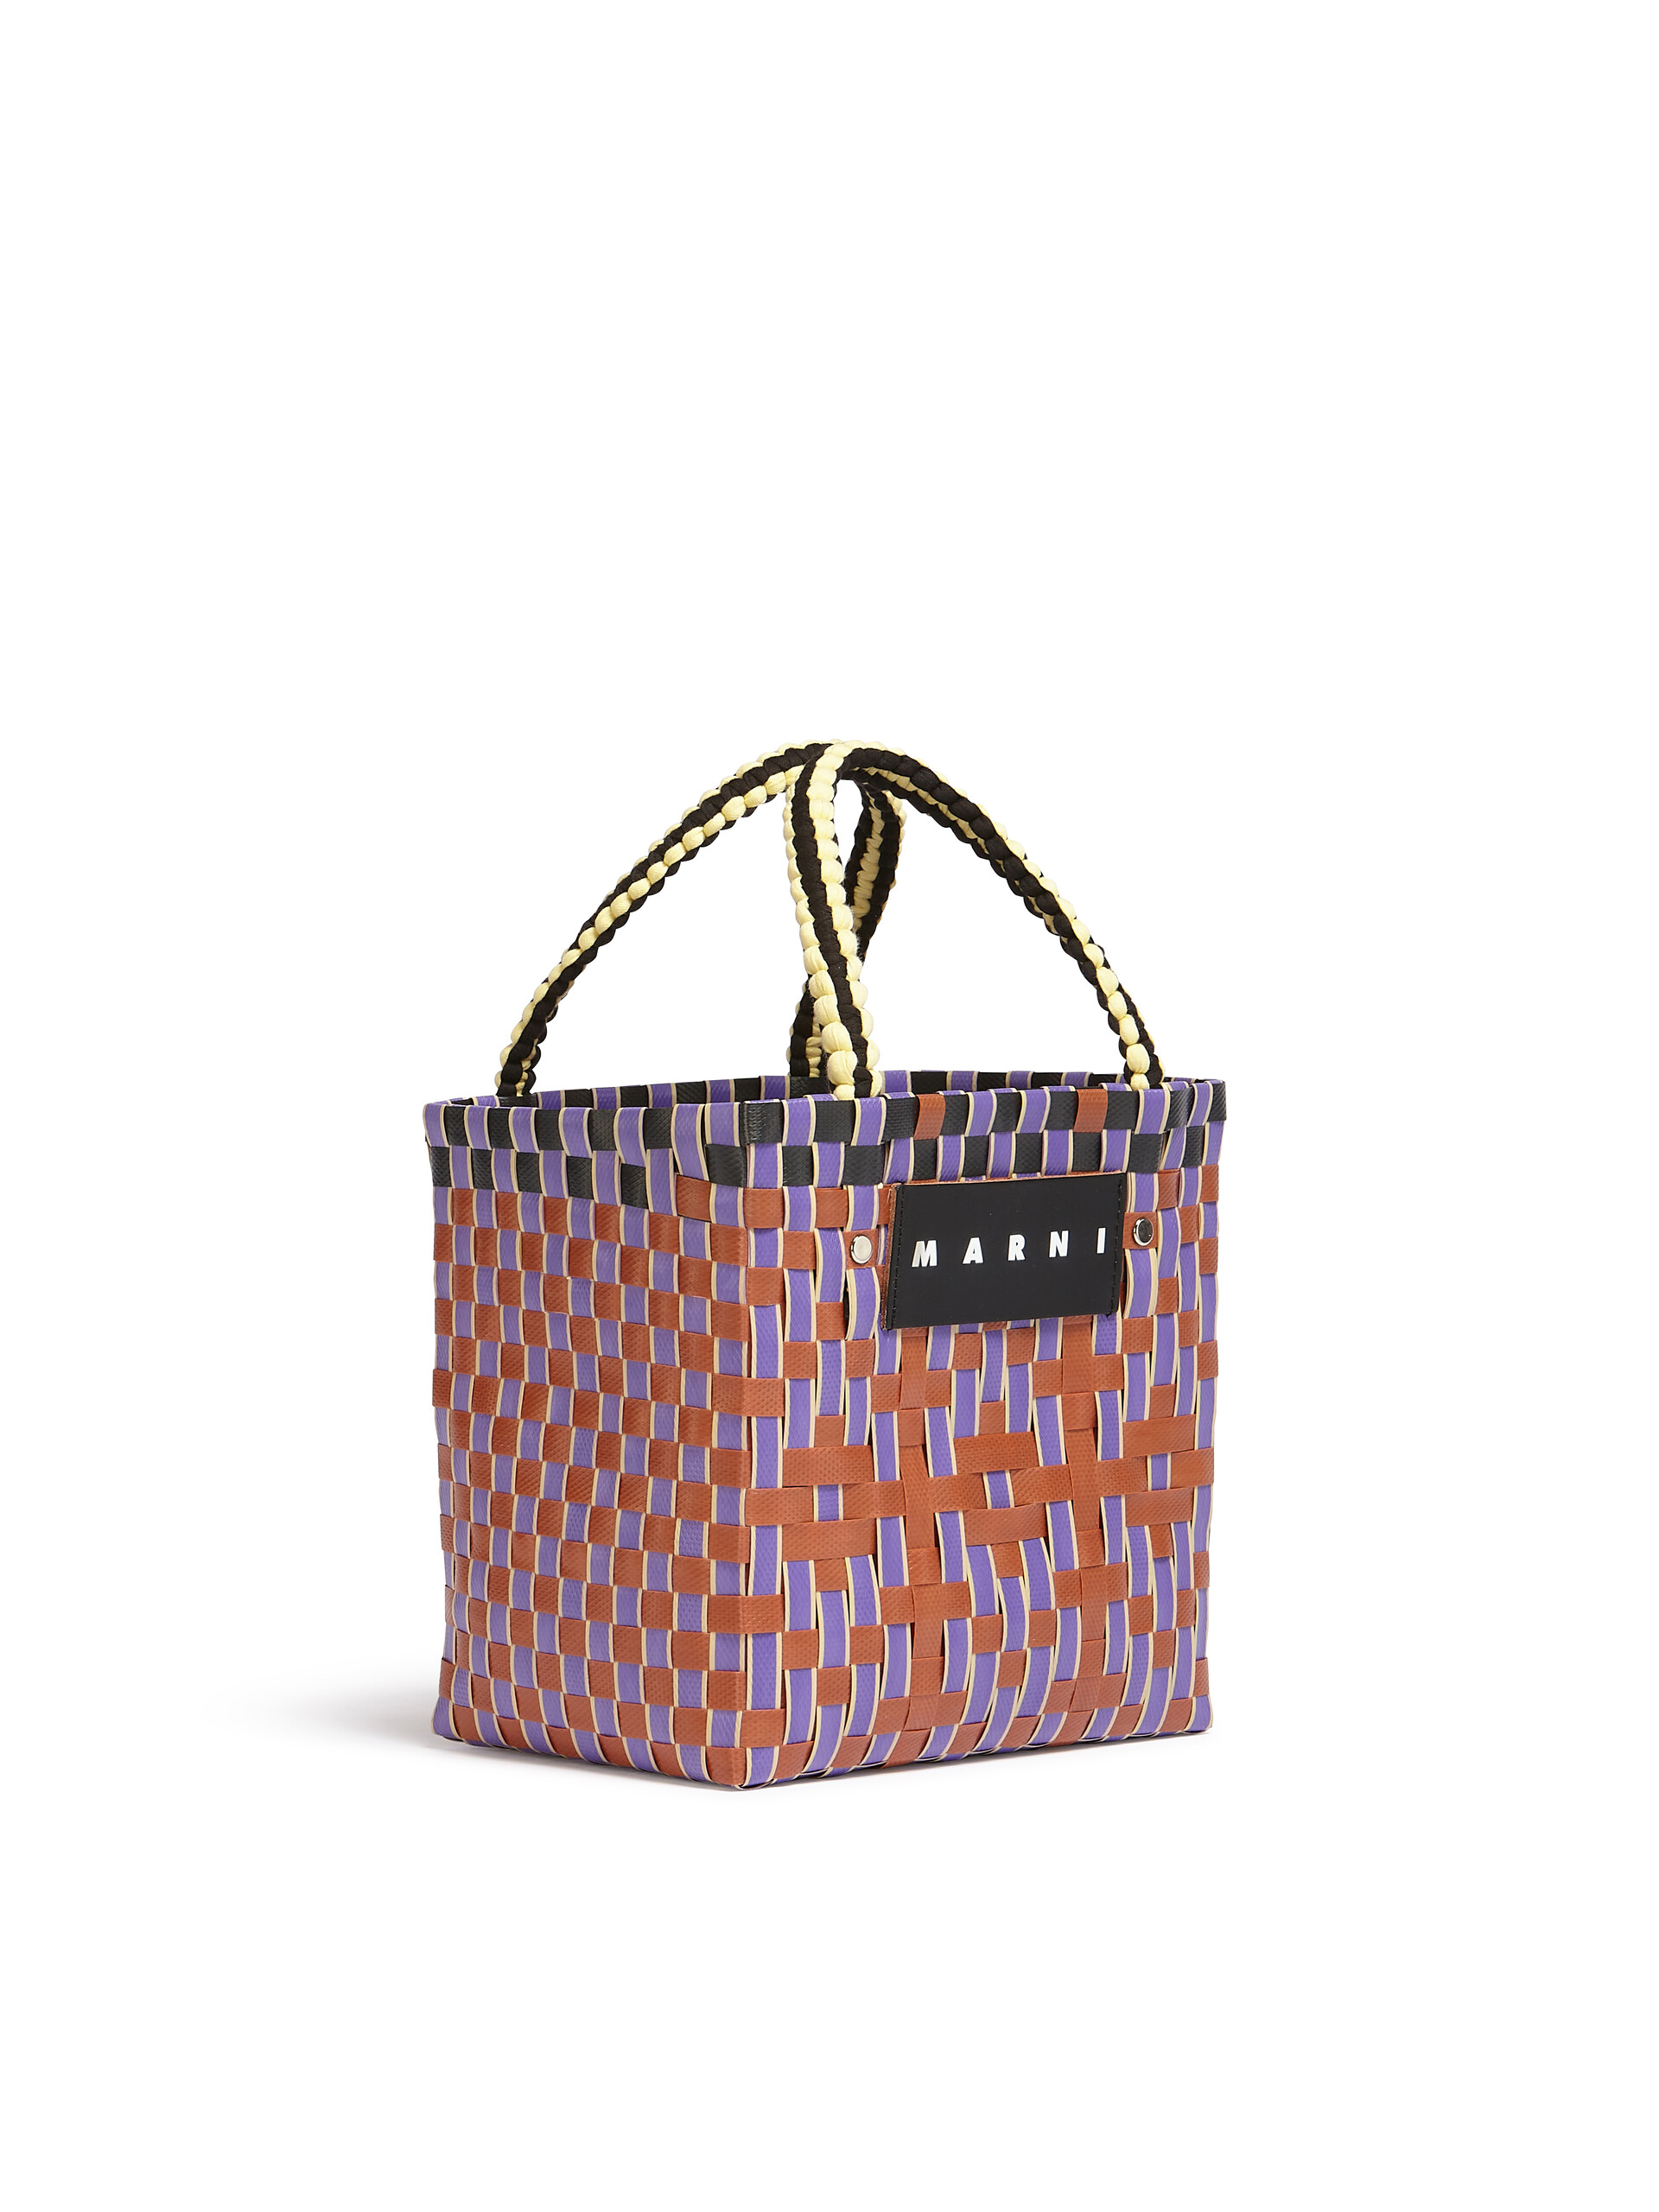 MARNI MARKET BASKET bag in brown diamond woven material | Marni